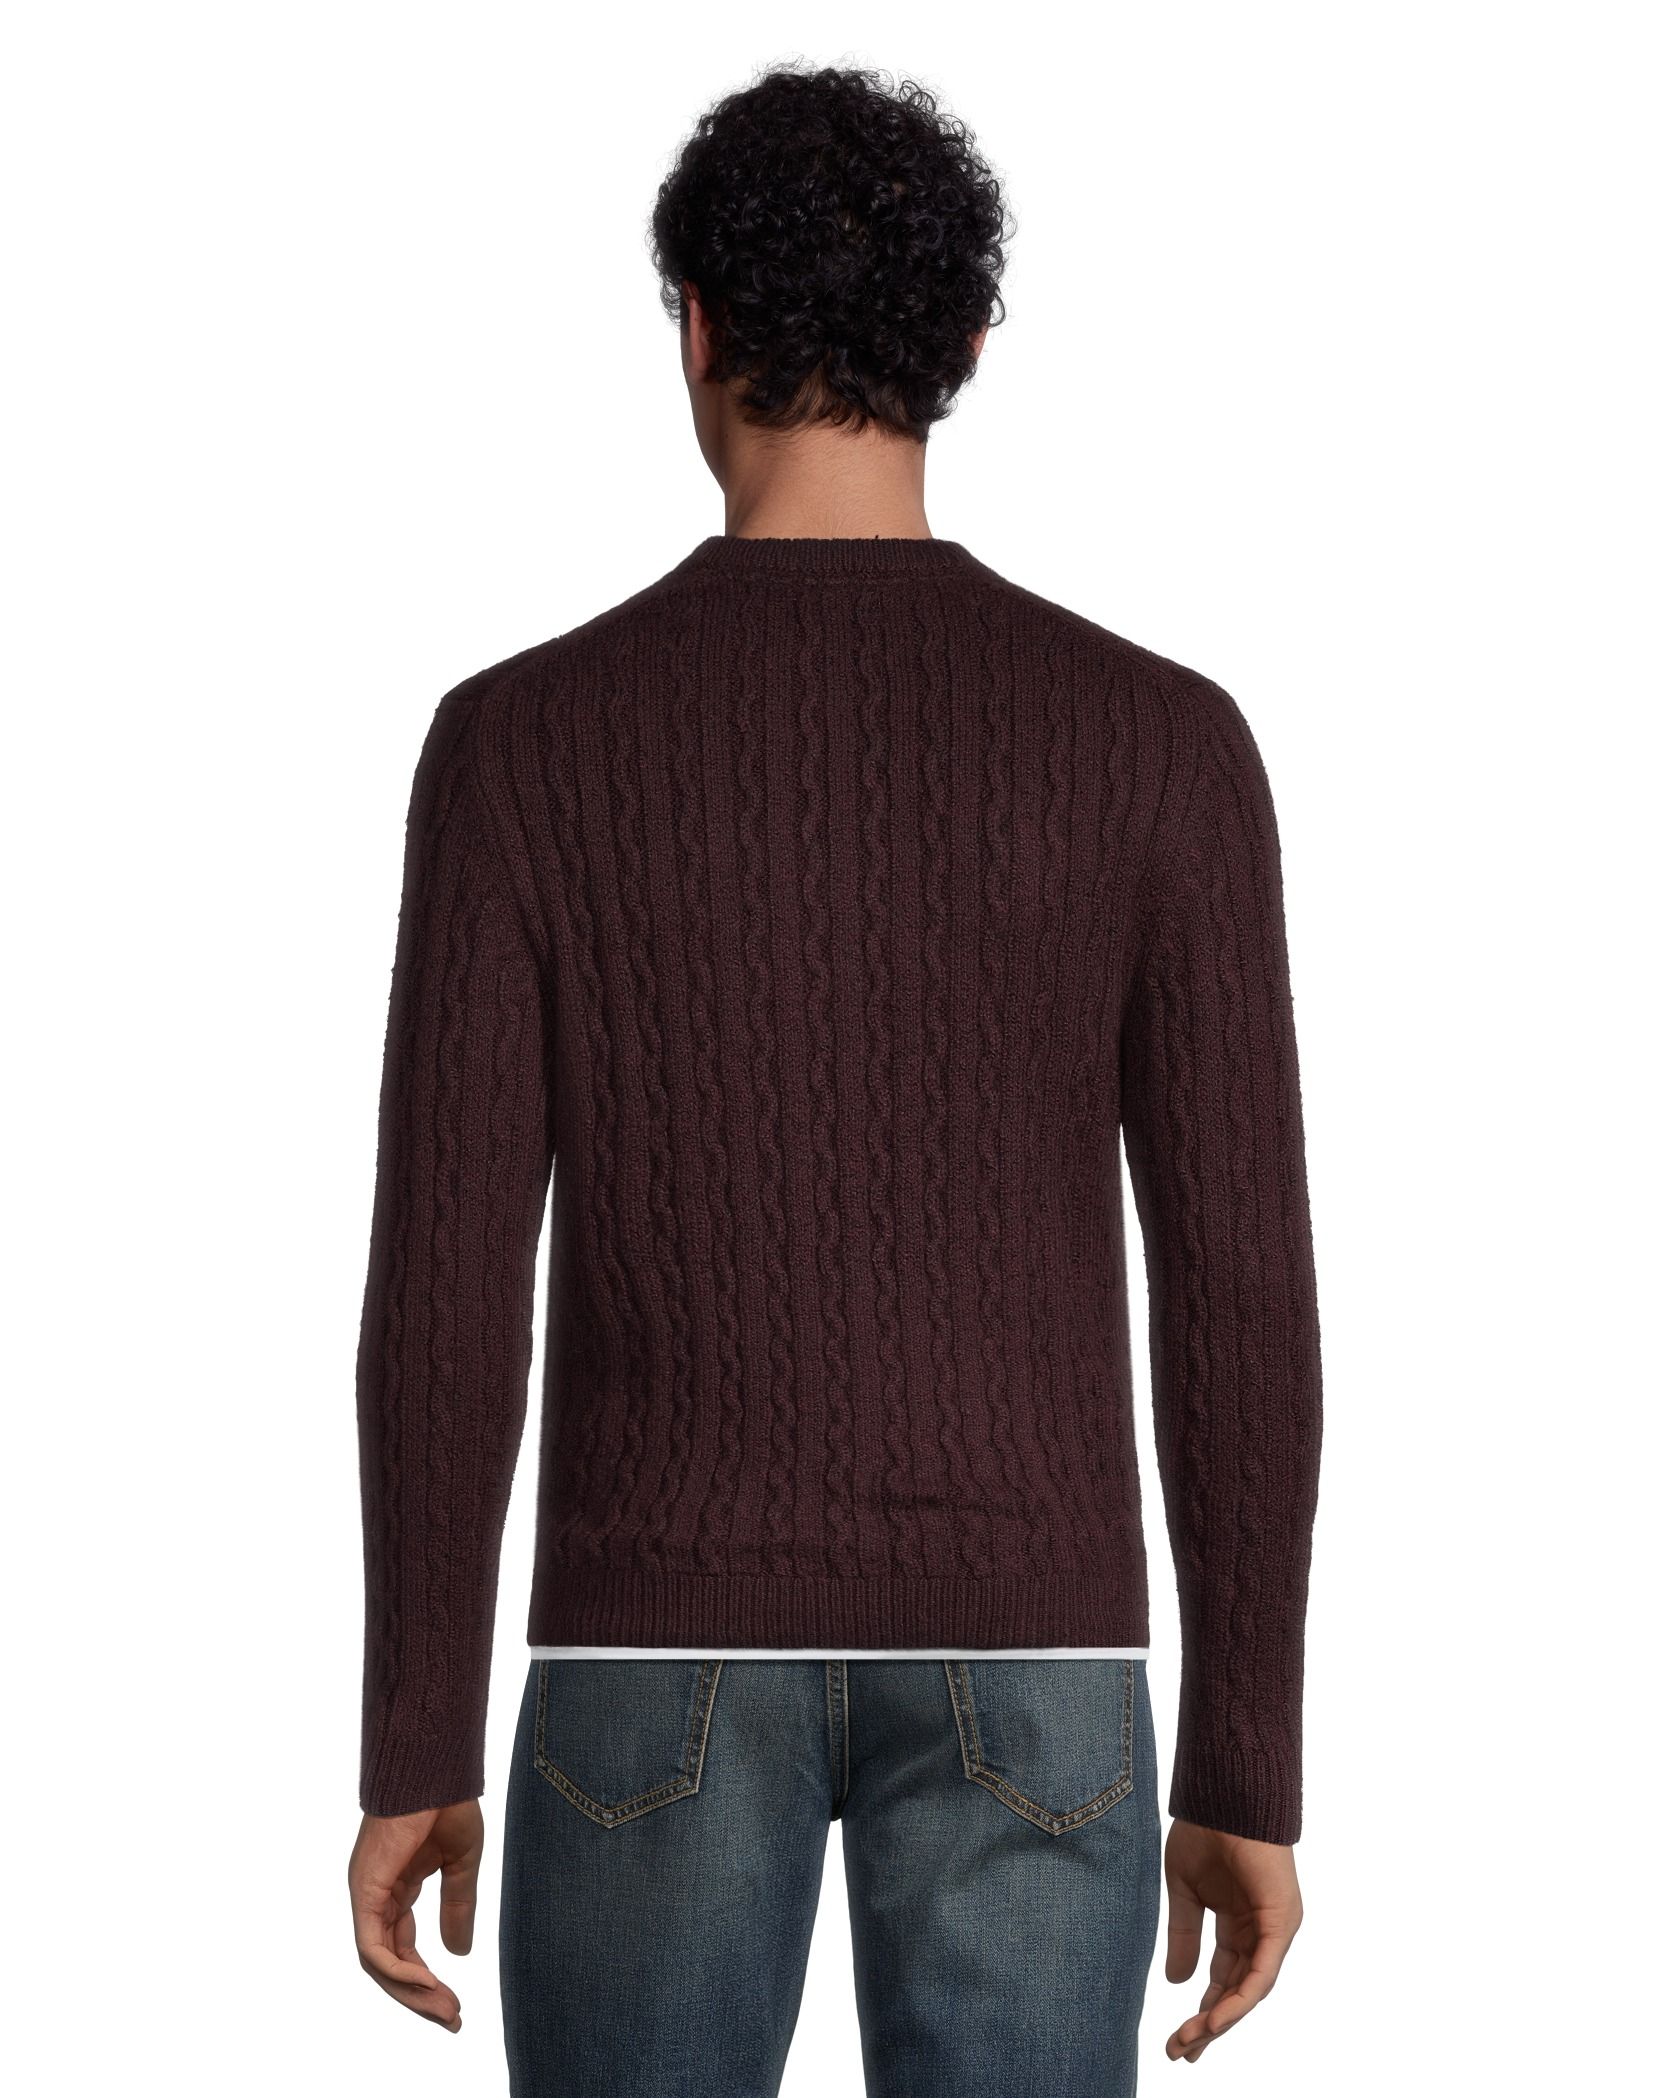 Denver Hayes Men's Cable Stitch Crewneck Sweater